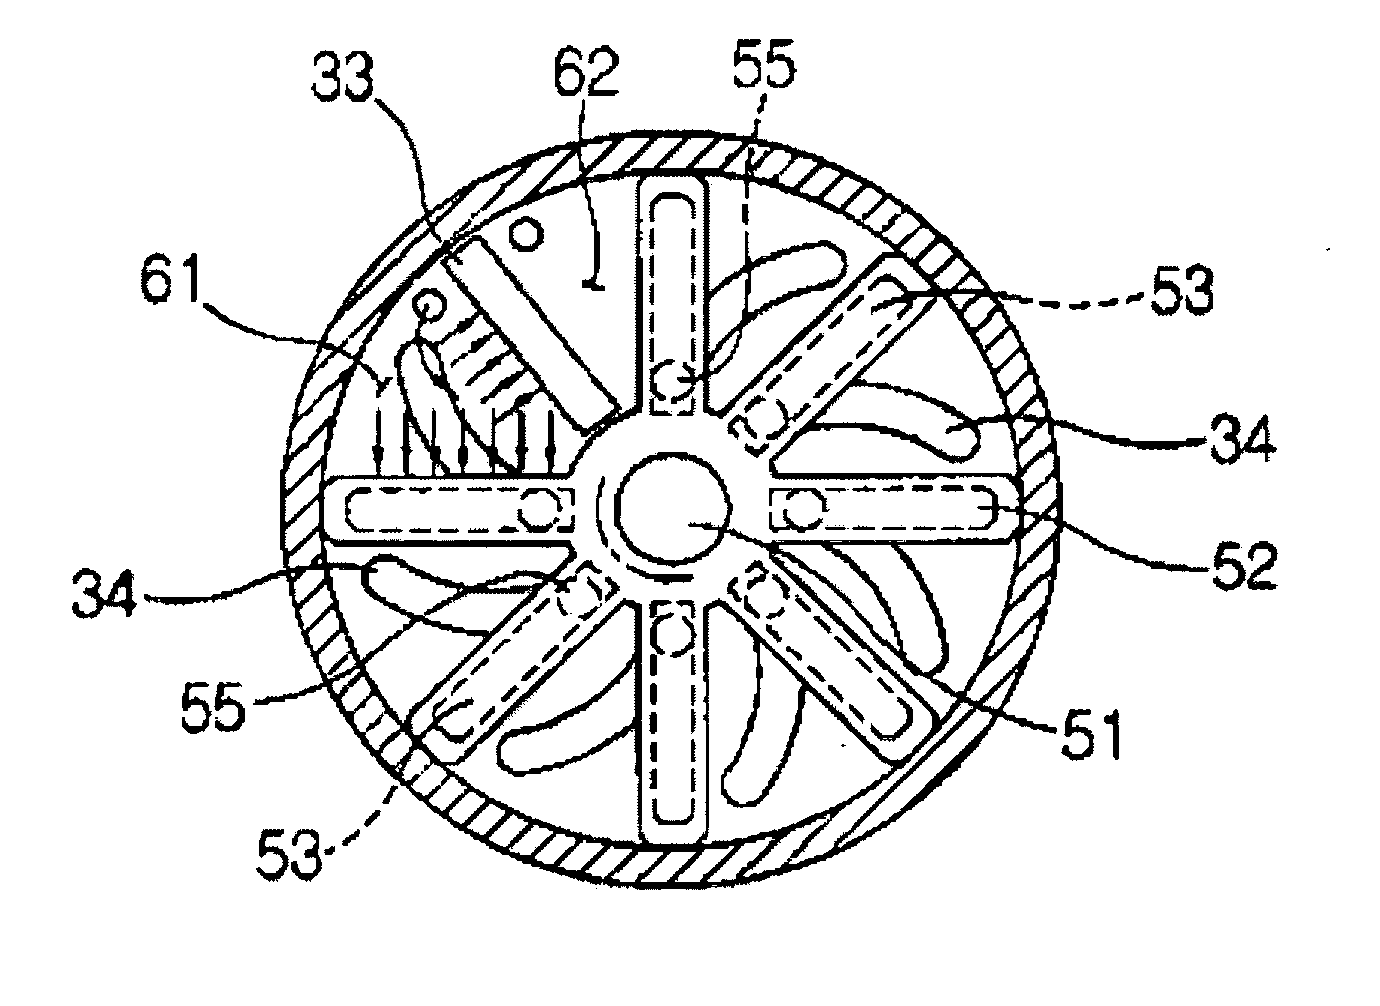 Variable inertia flywheel apparatus